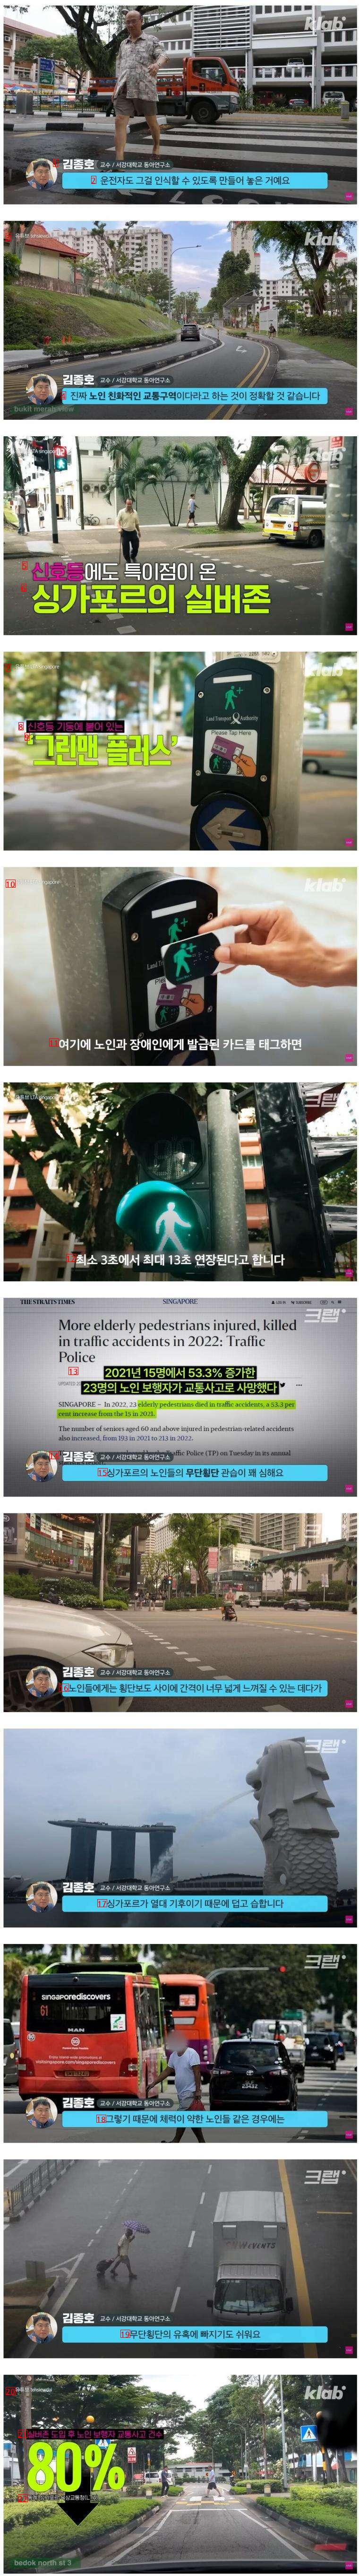 Increasing measures to prevent jaywalking among elderly people in Singapore